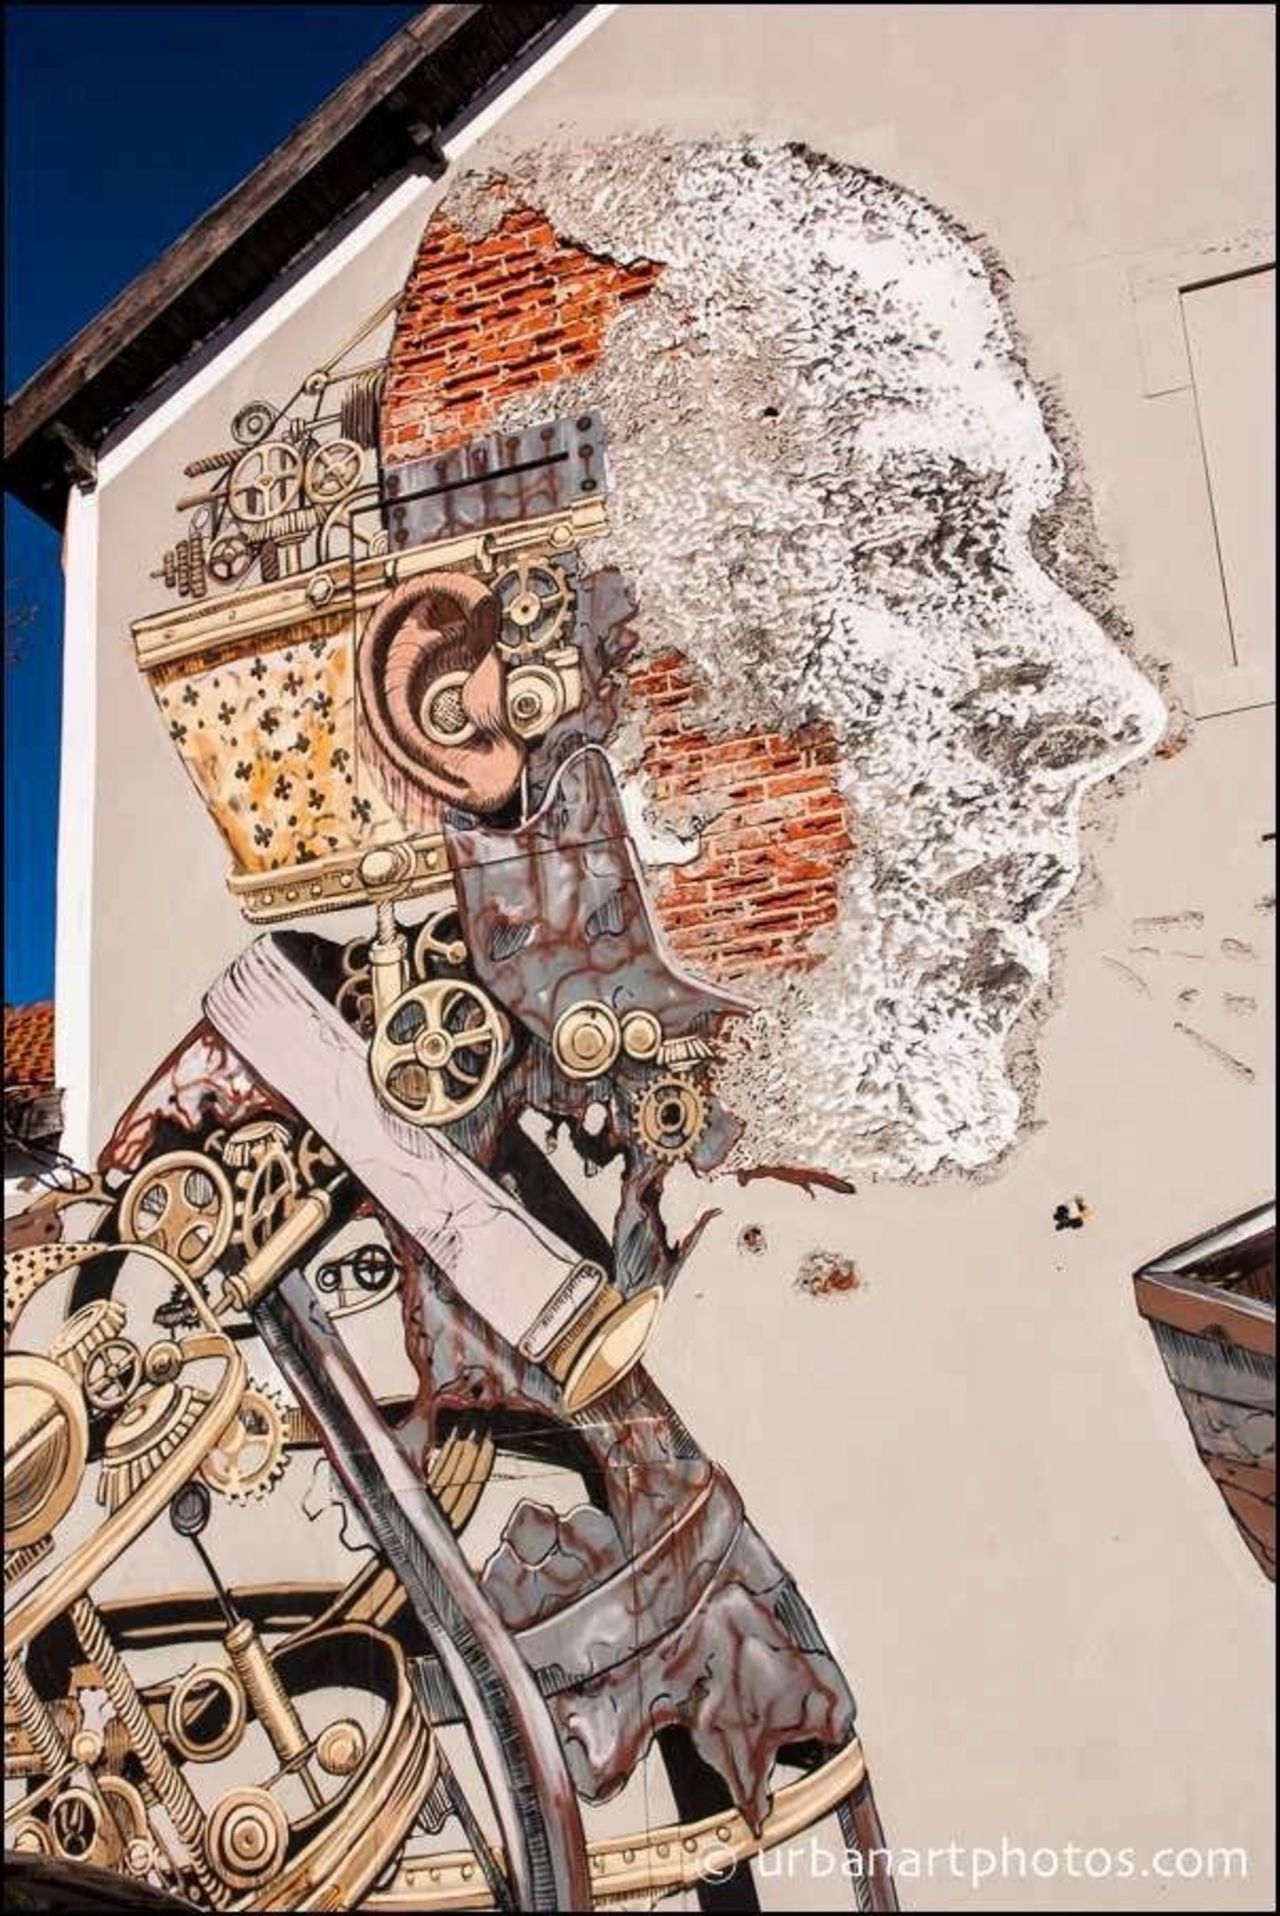 Vhils and Pixel Pancho#streetart #mural #graffiti #art https://t.co/U0xBCSkpRk